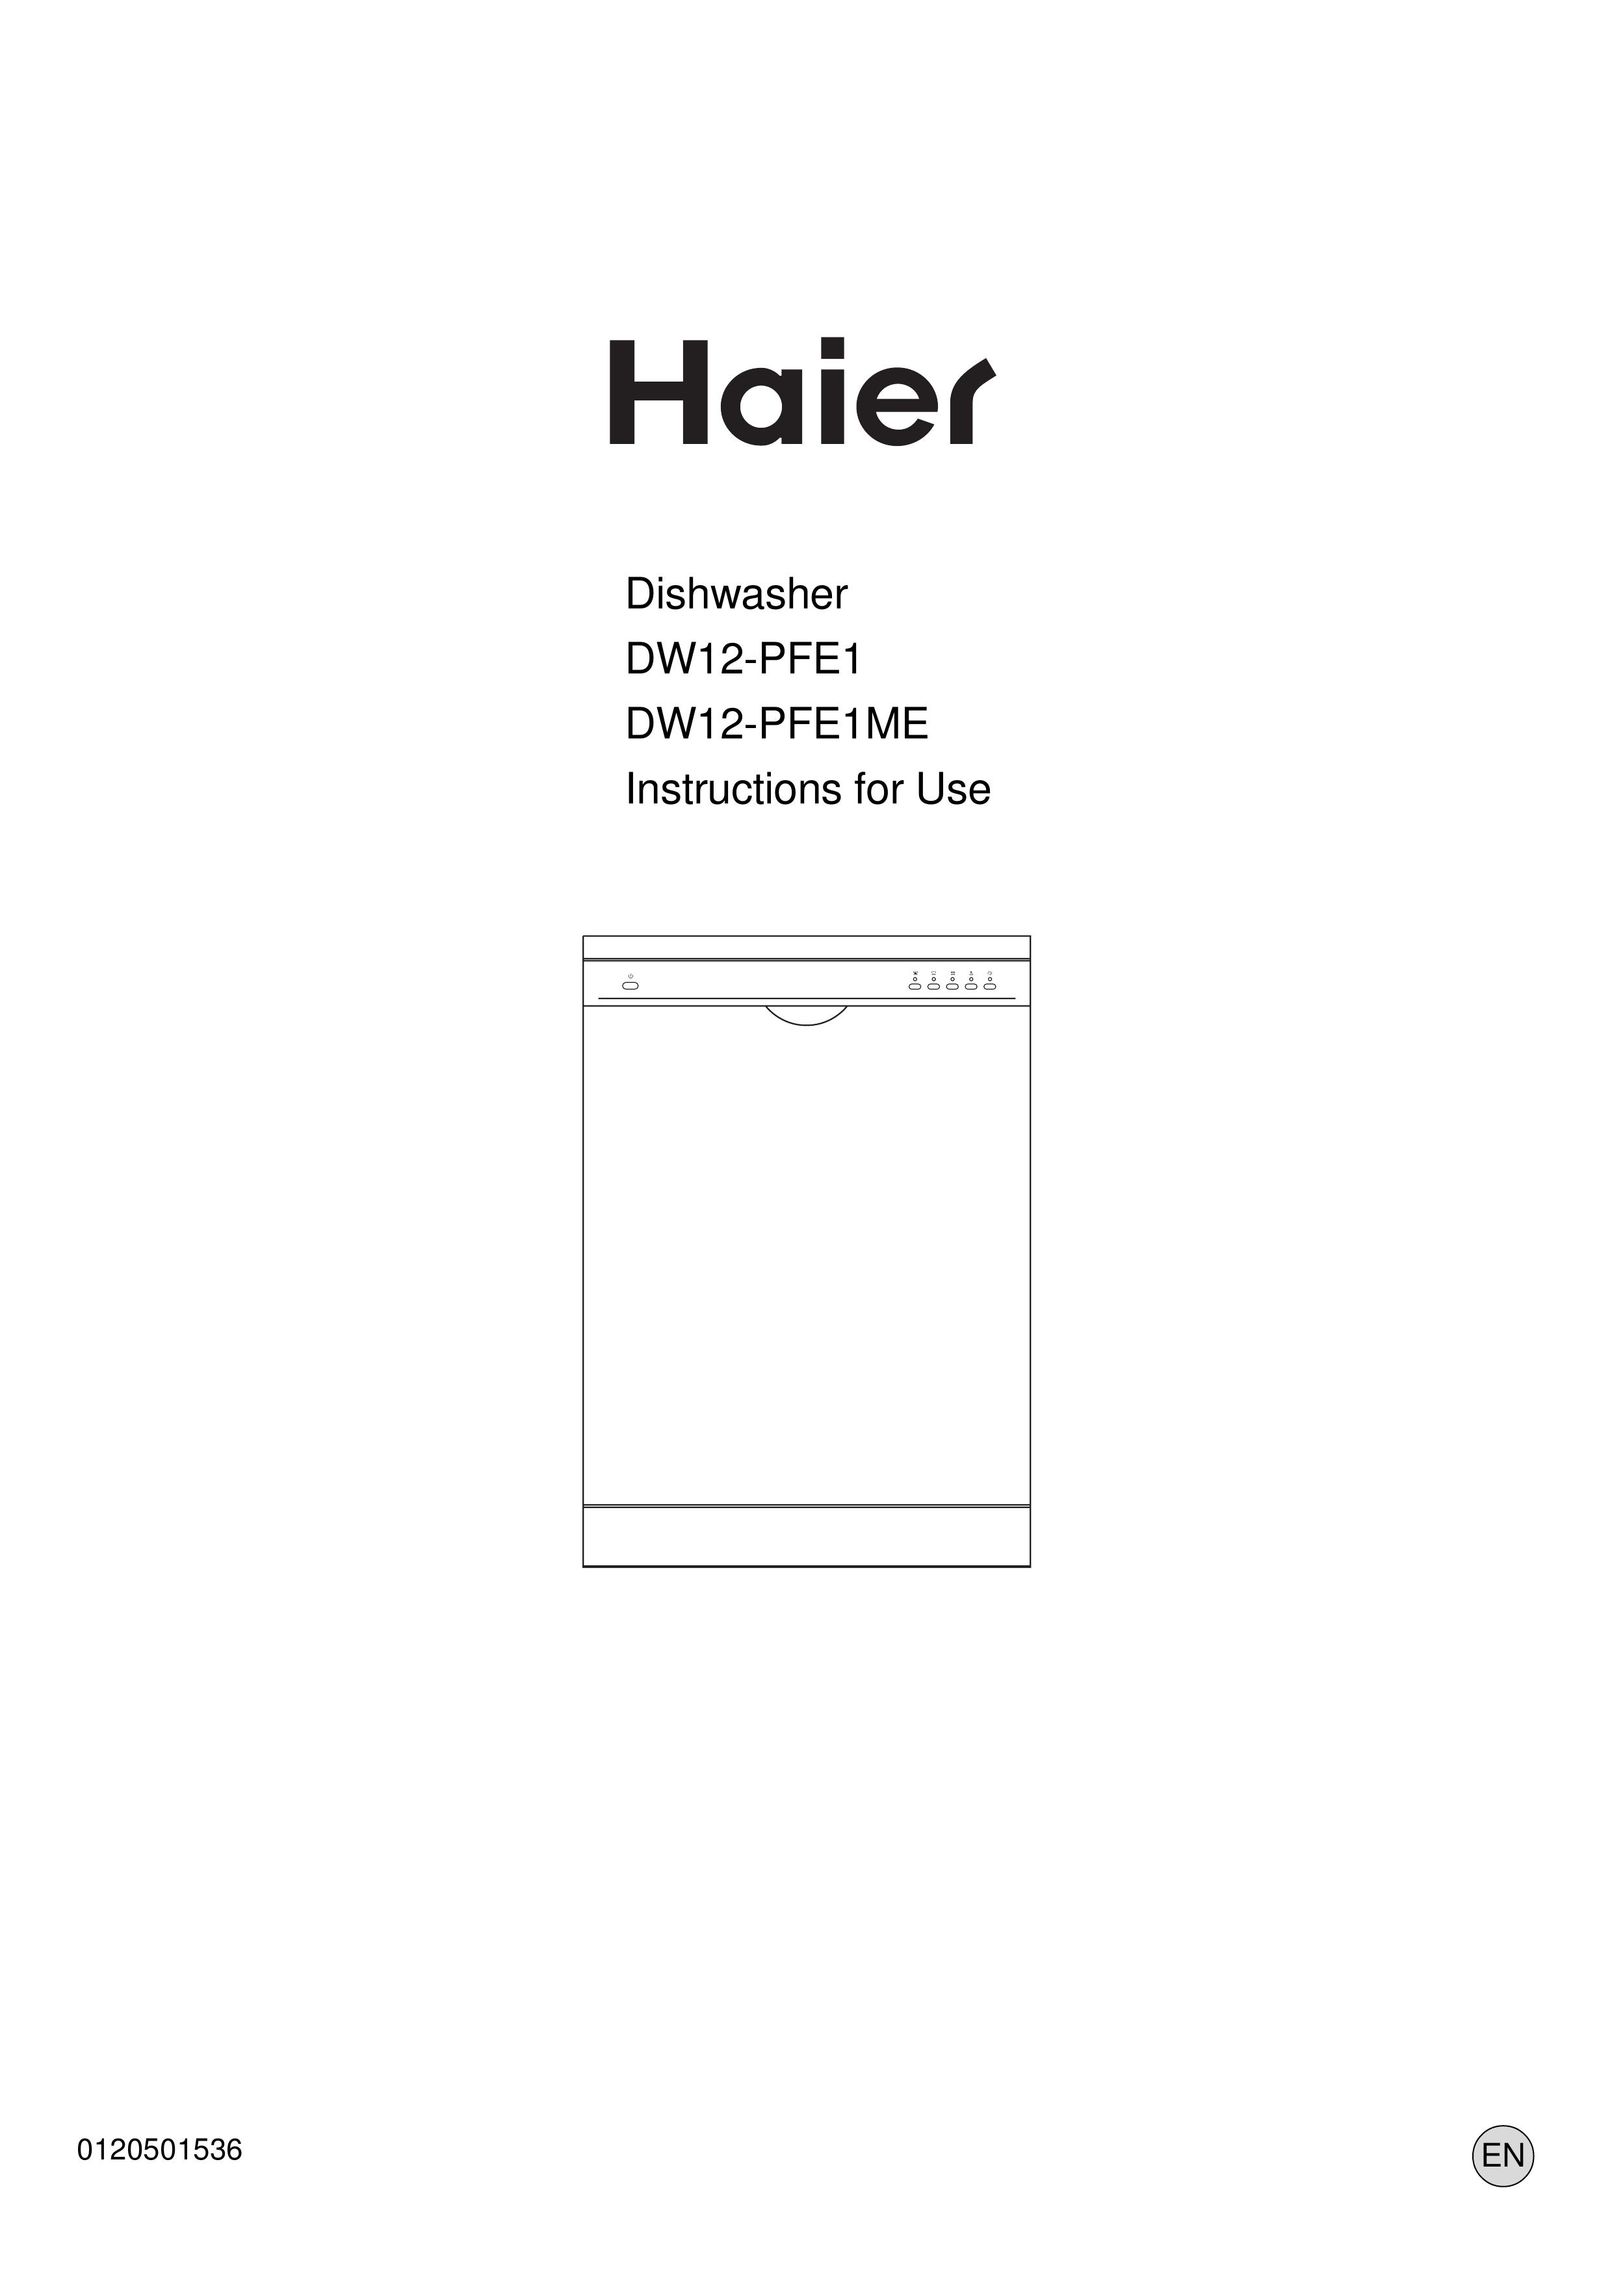 Haier DW12-PFE1 Dishwasher User Manual